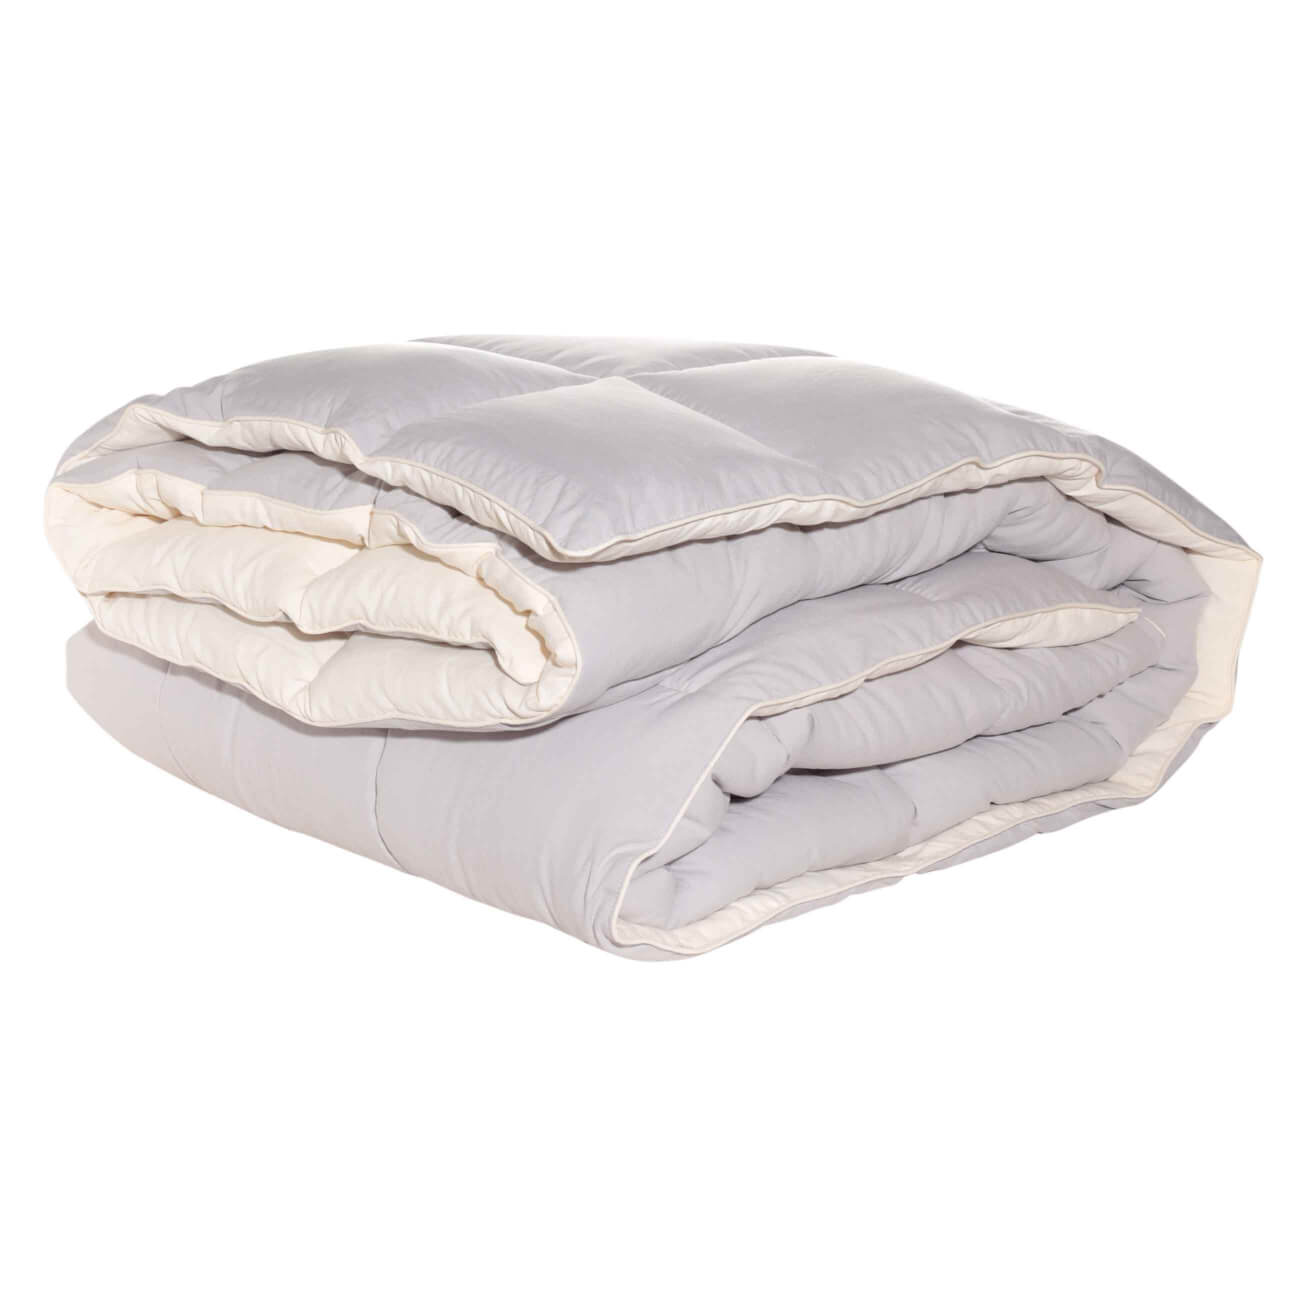 Одеяло, 140х200 см, микрофибра/холлофайбер, бежевое/молочное, Hollow fiber печенье юбилейное молочное глазированное 116 гр